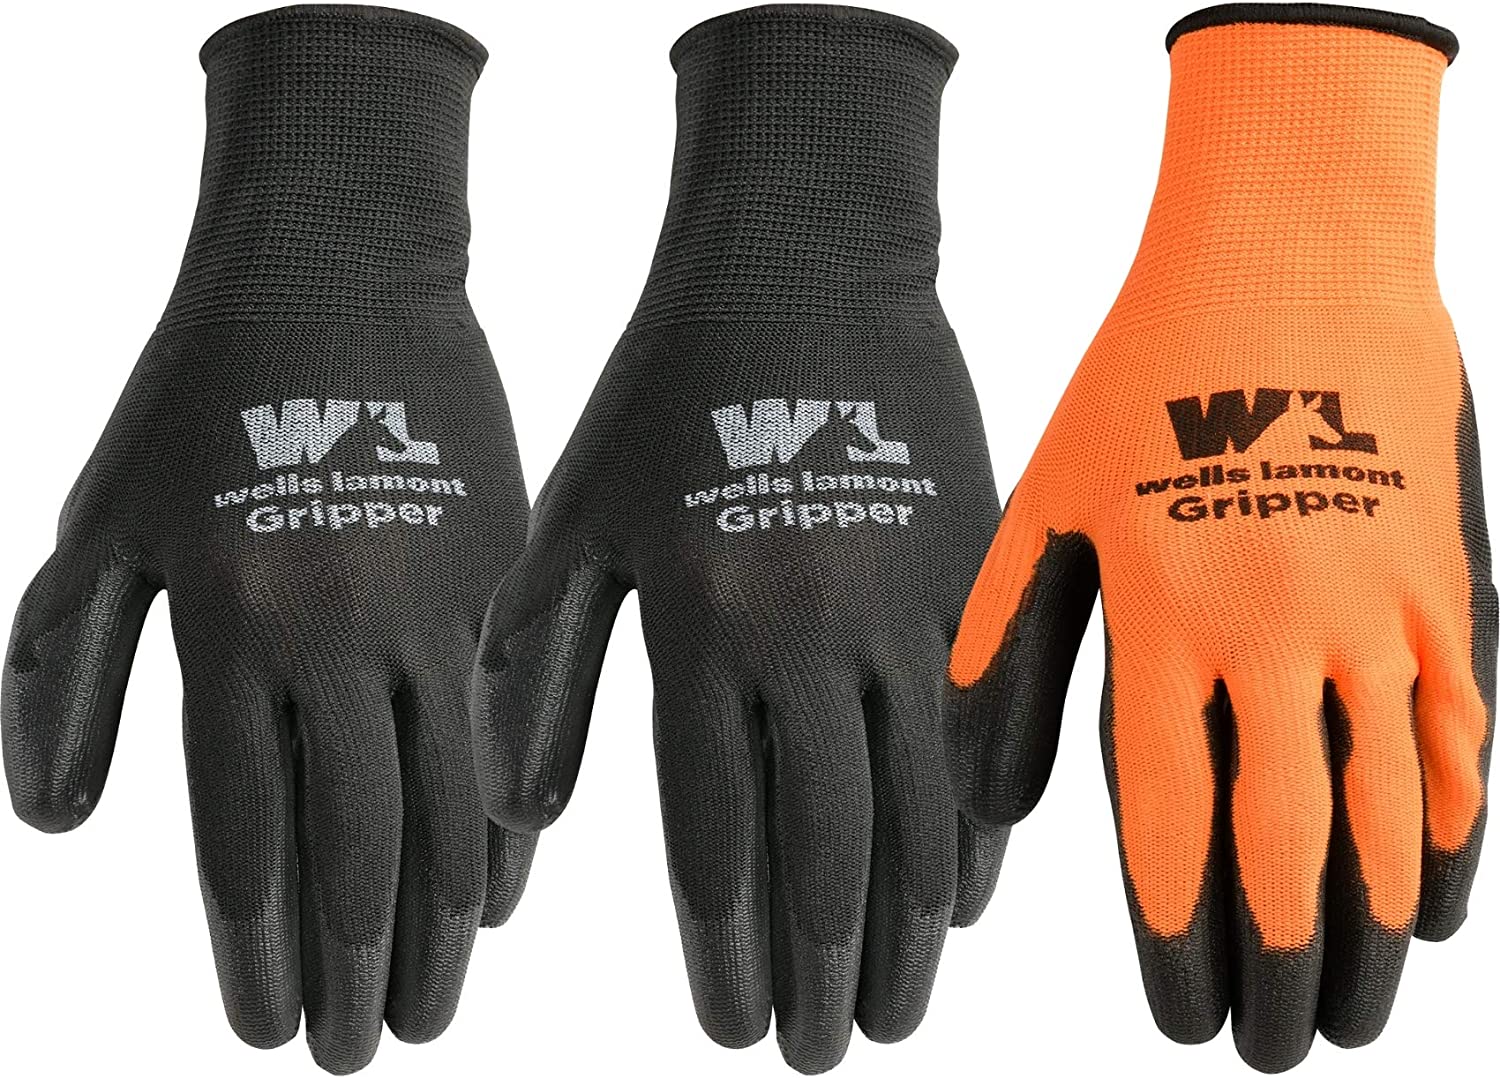 Wells Lamont mens 559lf Work Gloves, Black, Large Pack of 6 US